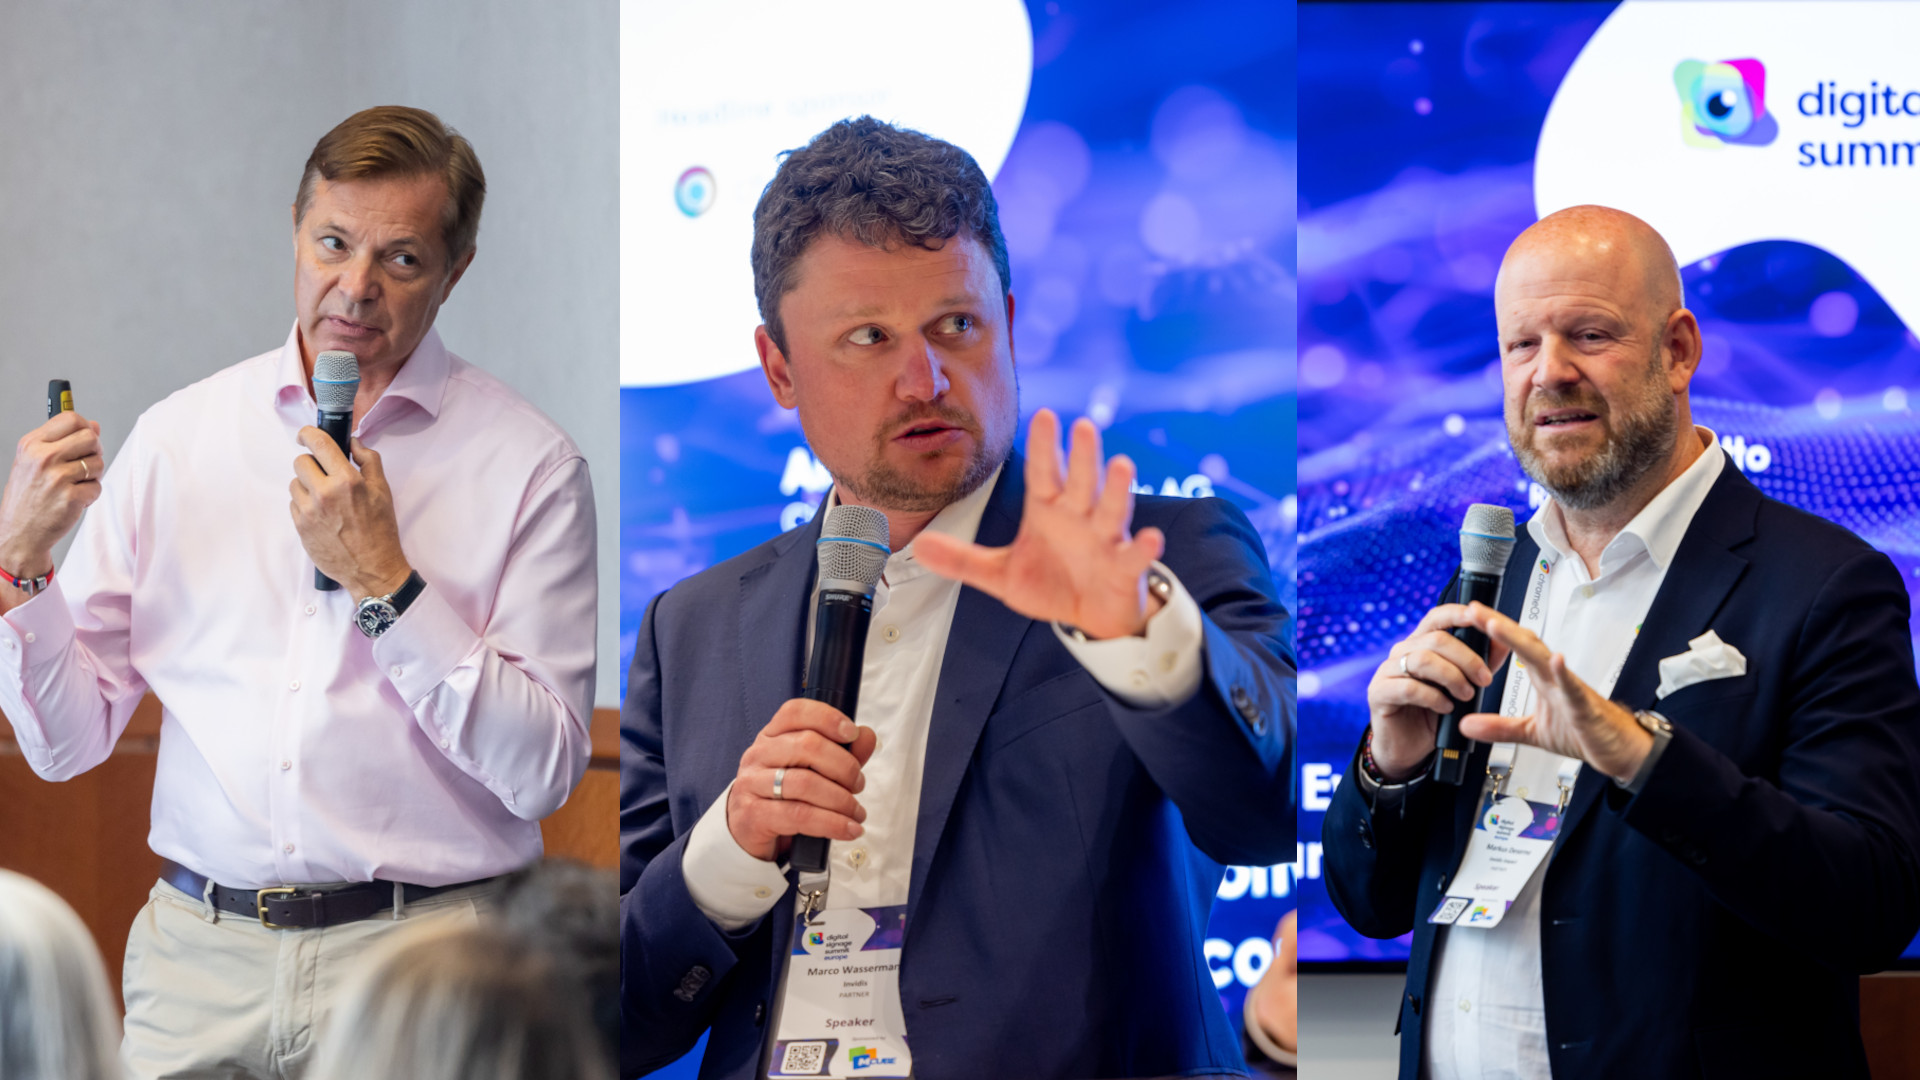 The experts of invidis impact (from left to right): Daniel Oelker, Marco Wassermann, Markus Deserno (Photos: Maarten Schuth/invidis)